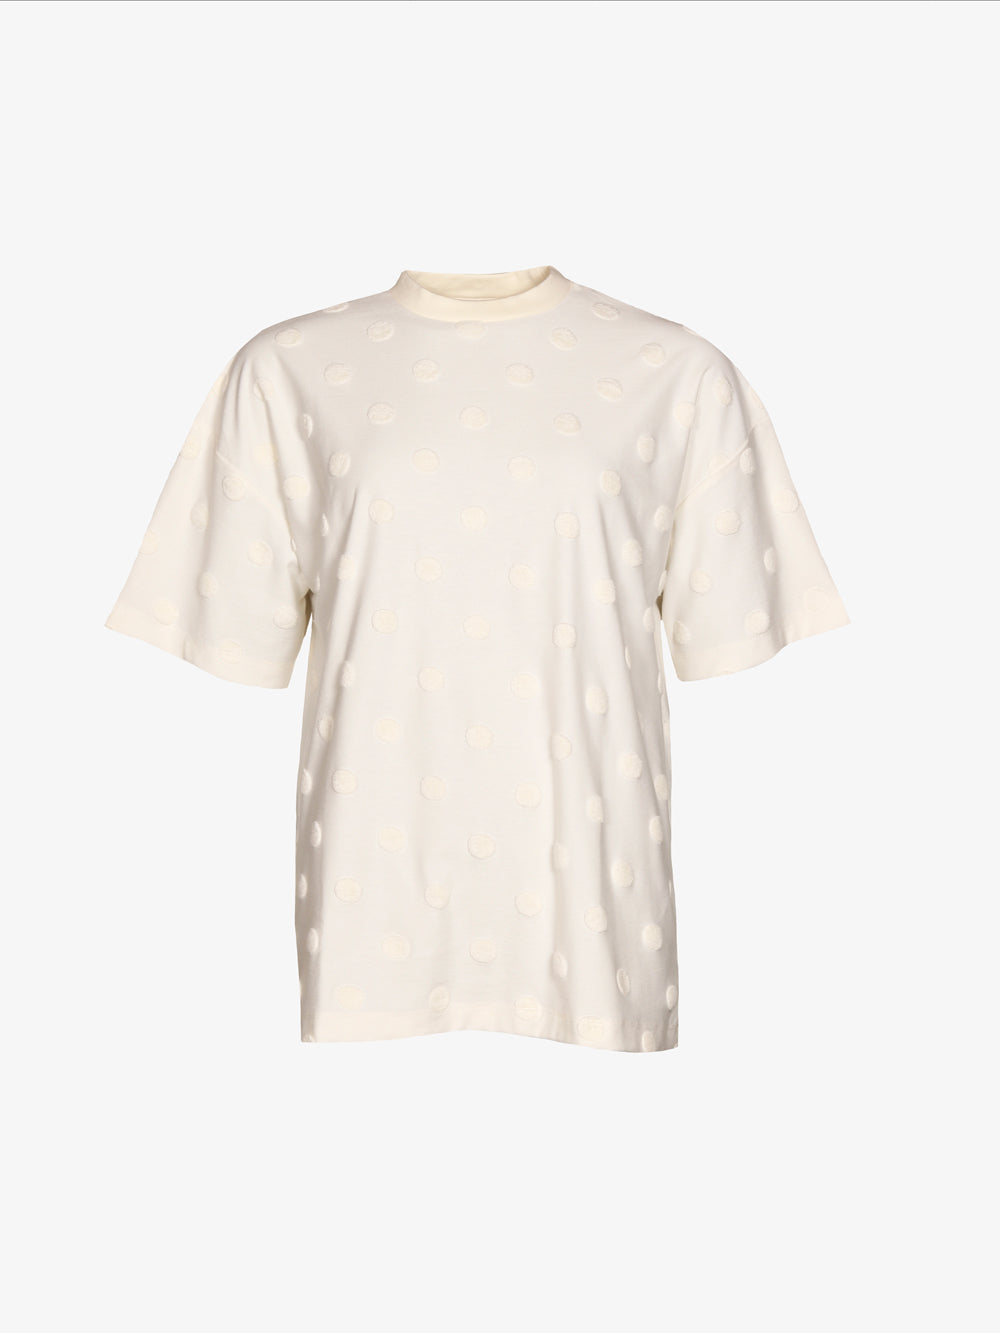 Trine Shirt, Big Dot White